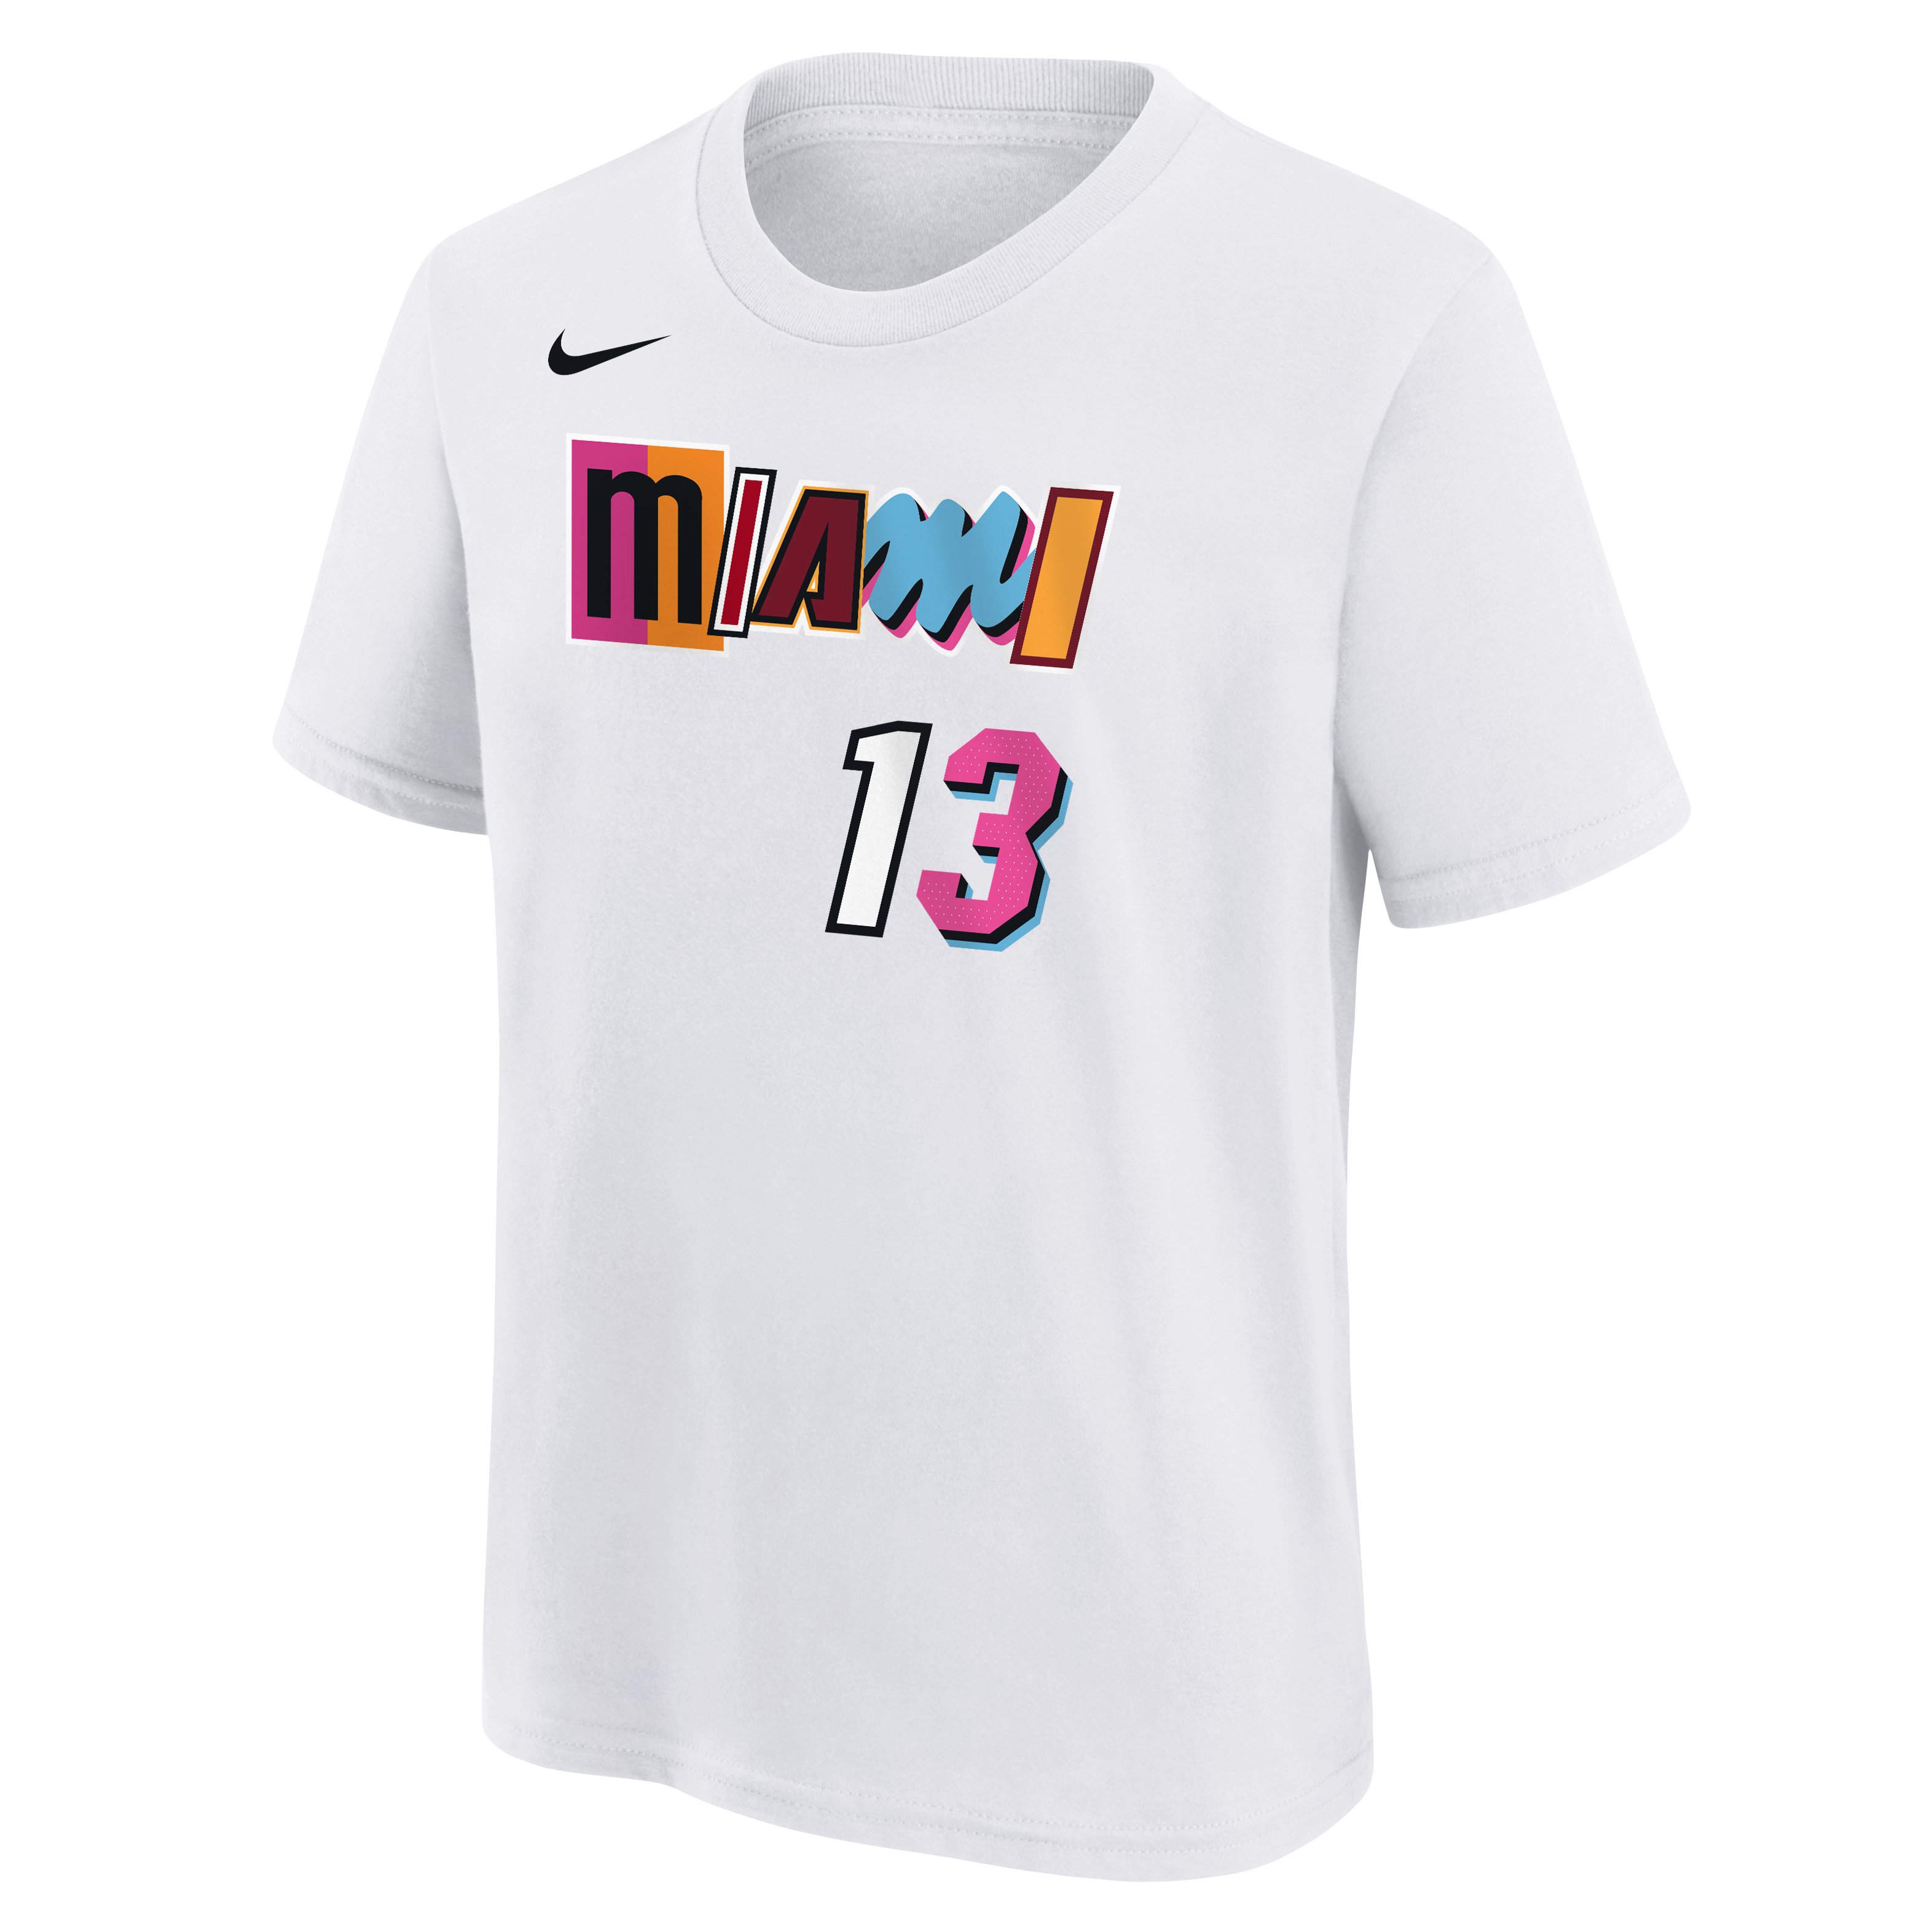 Unique Stylistic Tee Miami Heat Shirt, Basketball Tee Shirt White S